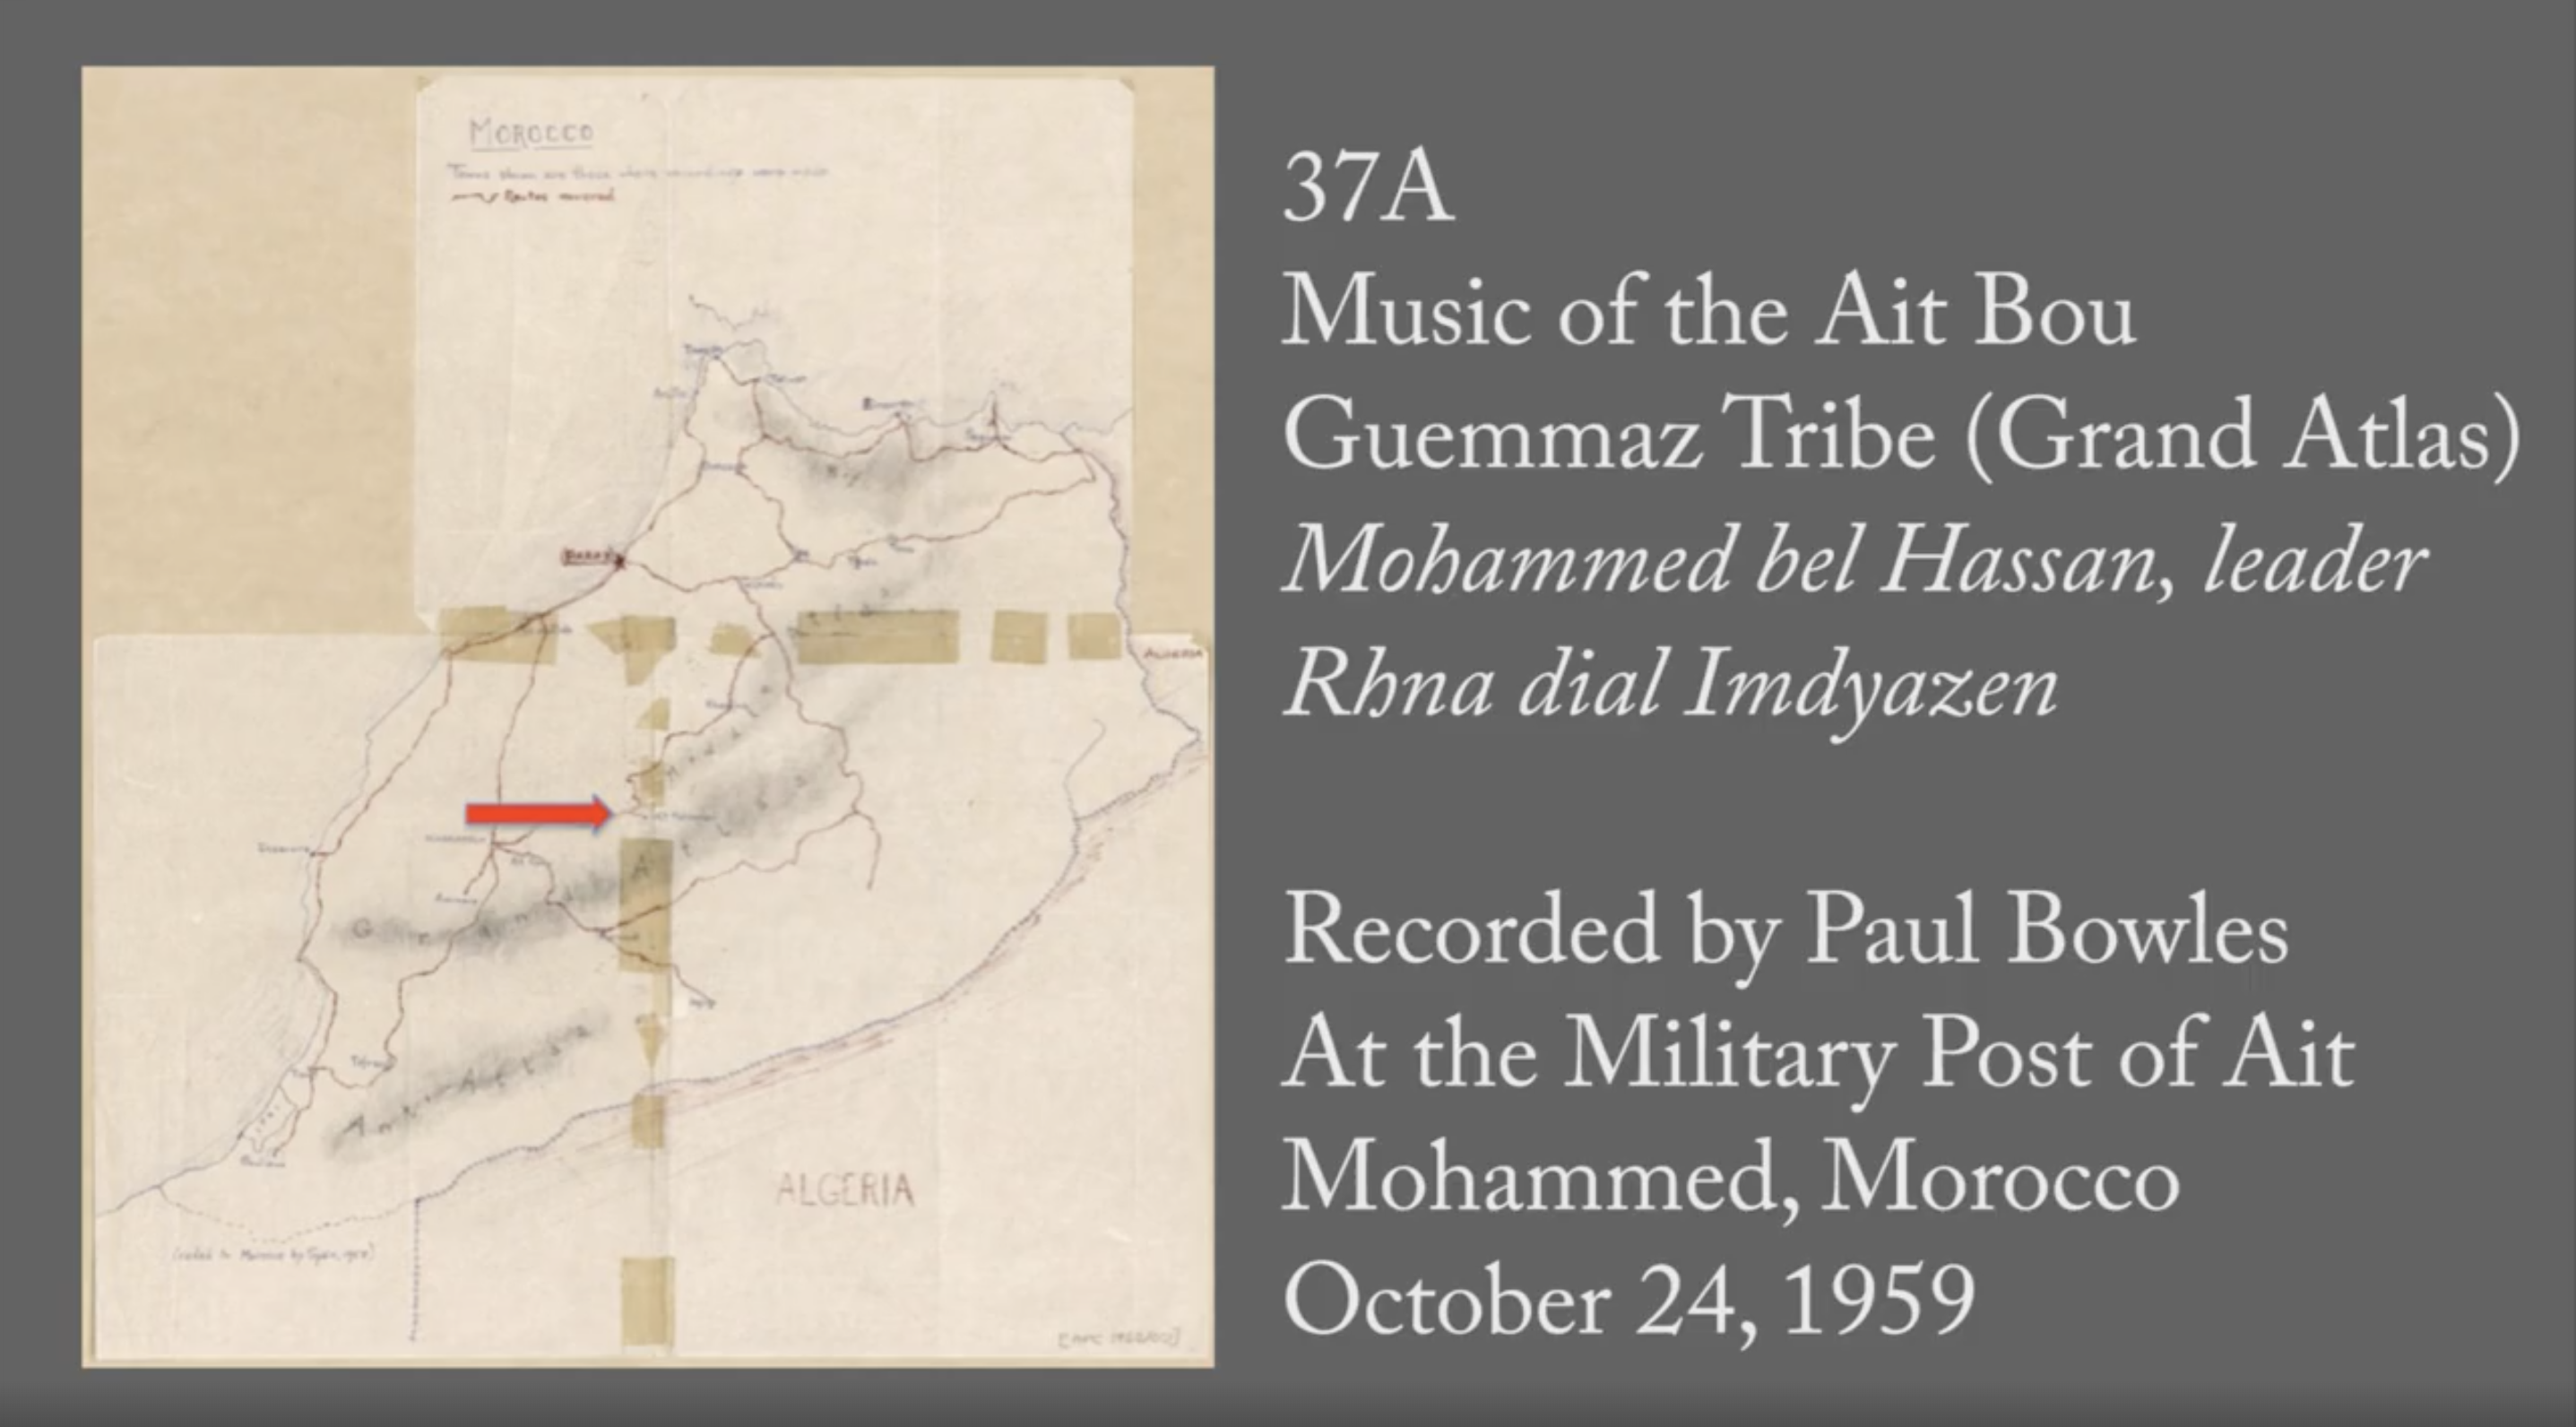 37A: "Rhna dial Imdyazen" Music of the Ait Bou Guemmaz Tribe